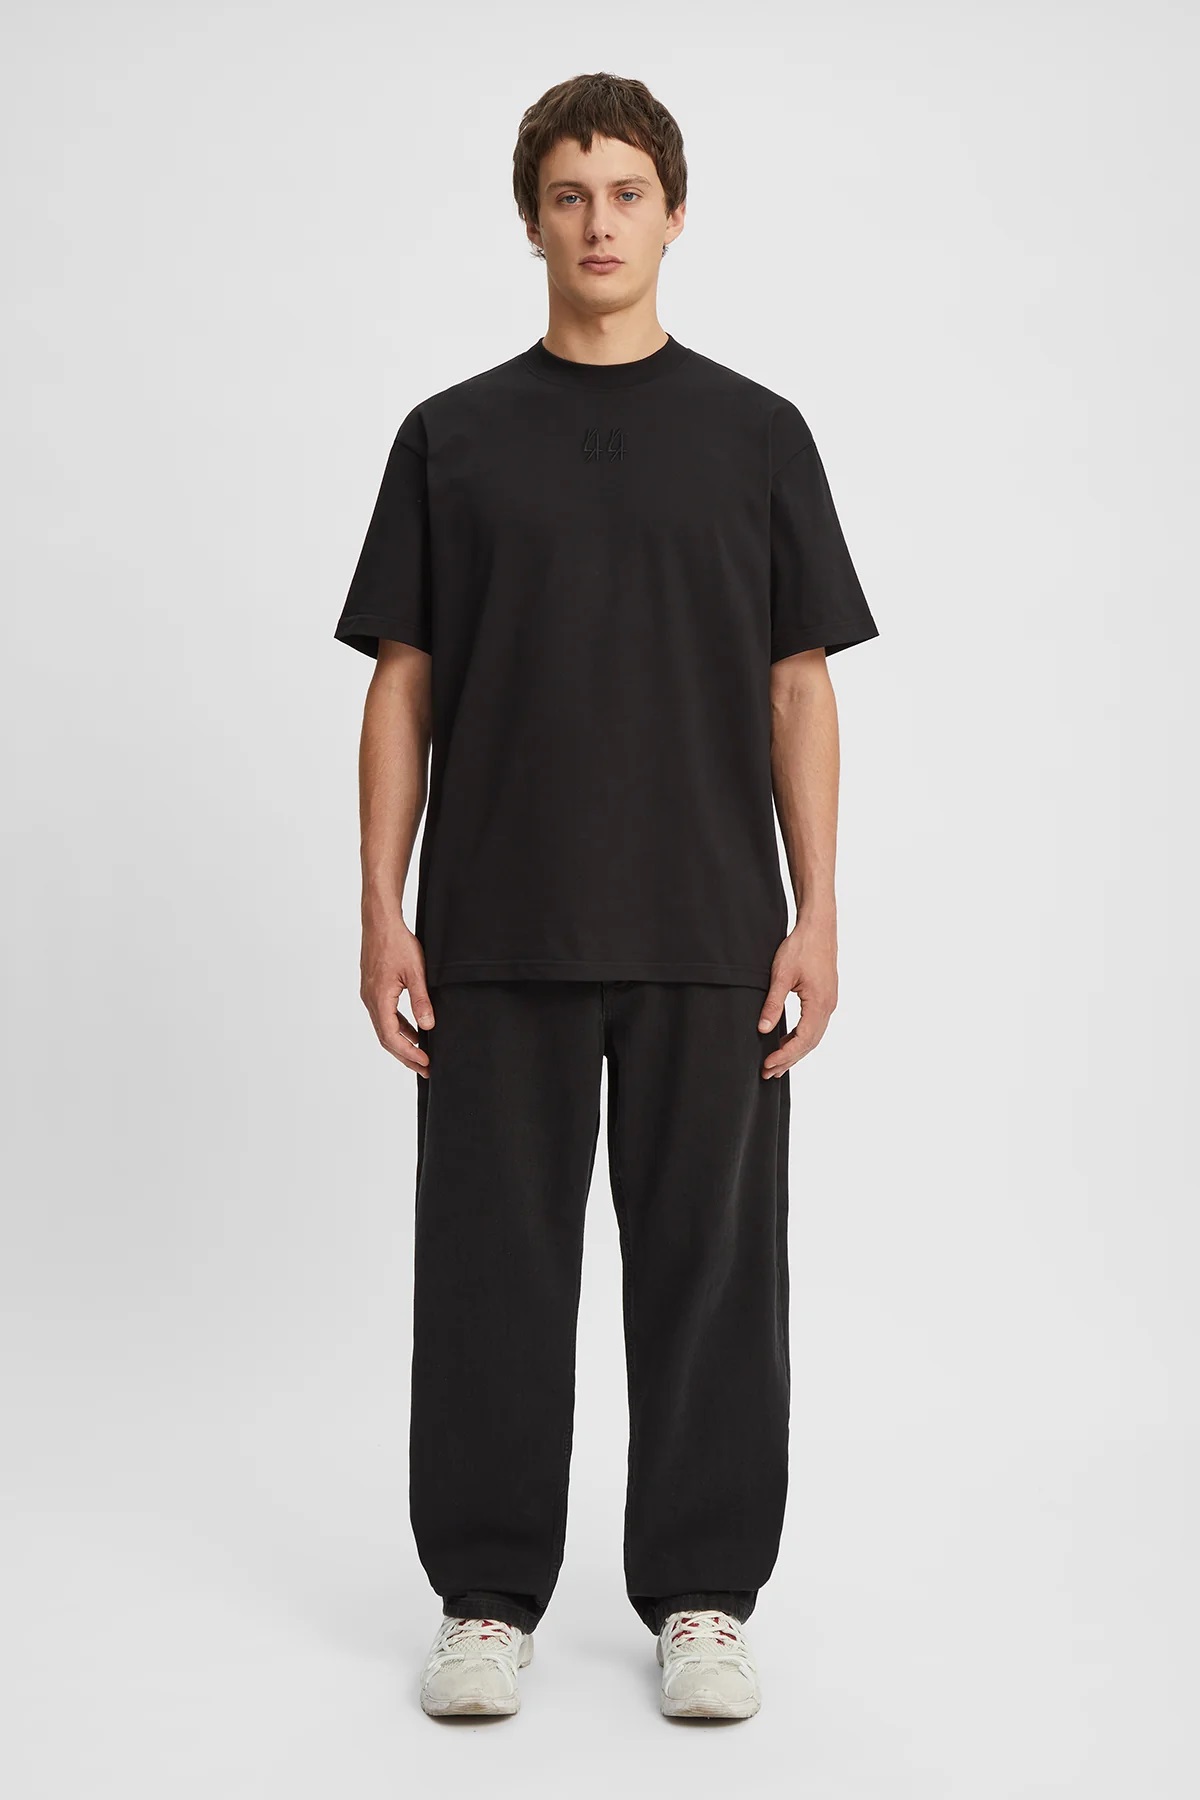 44 LABEL GROUP Original T-Shirt in Black/Neon Print S